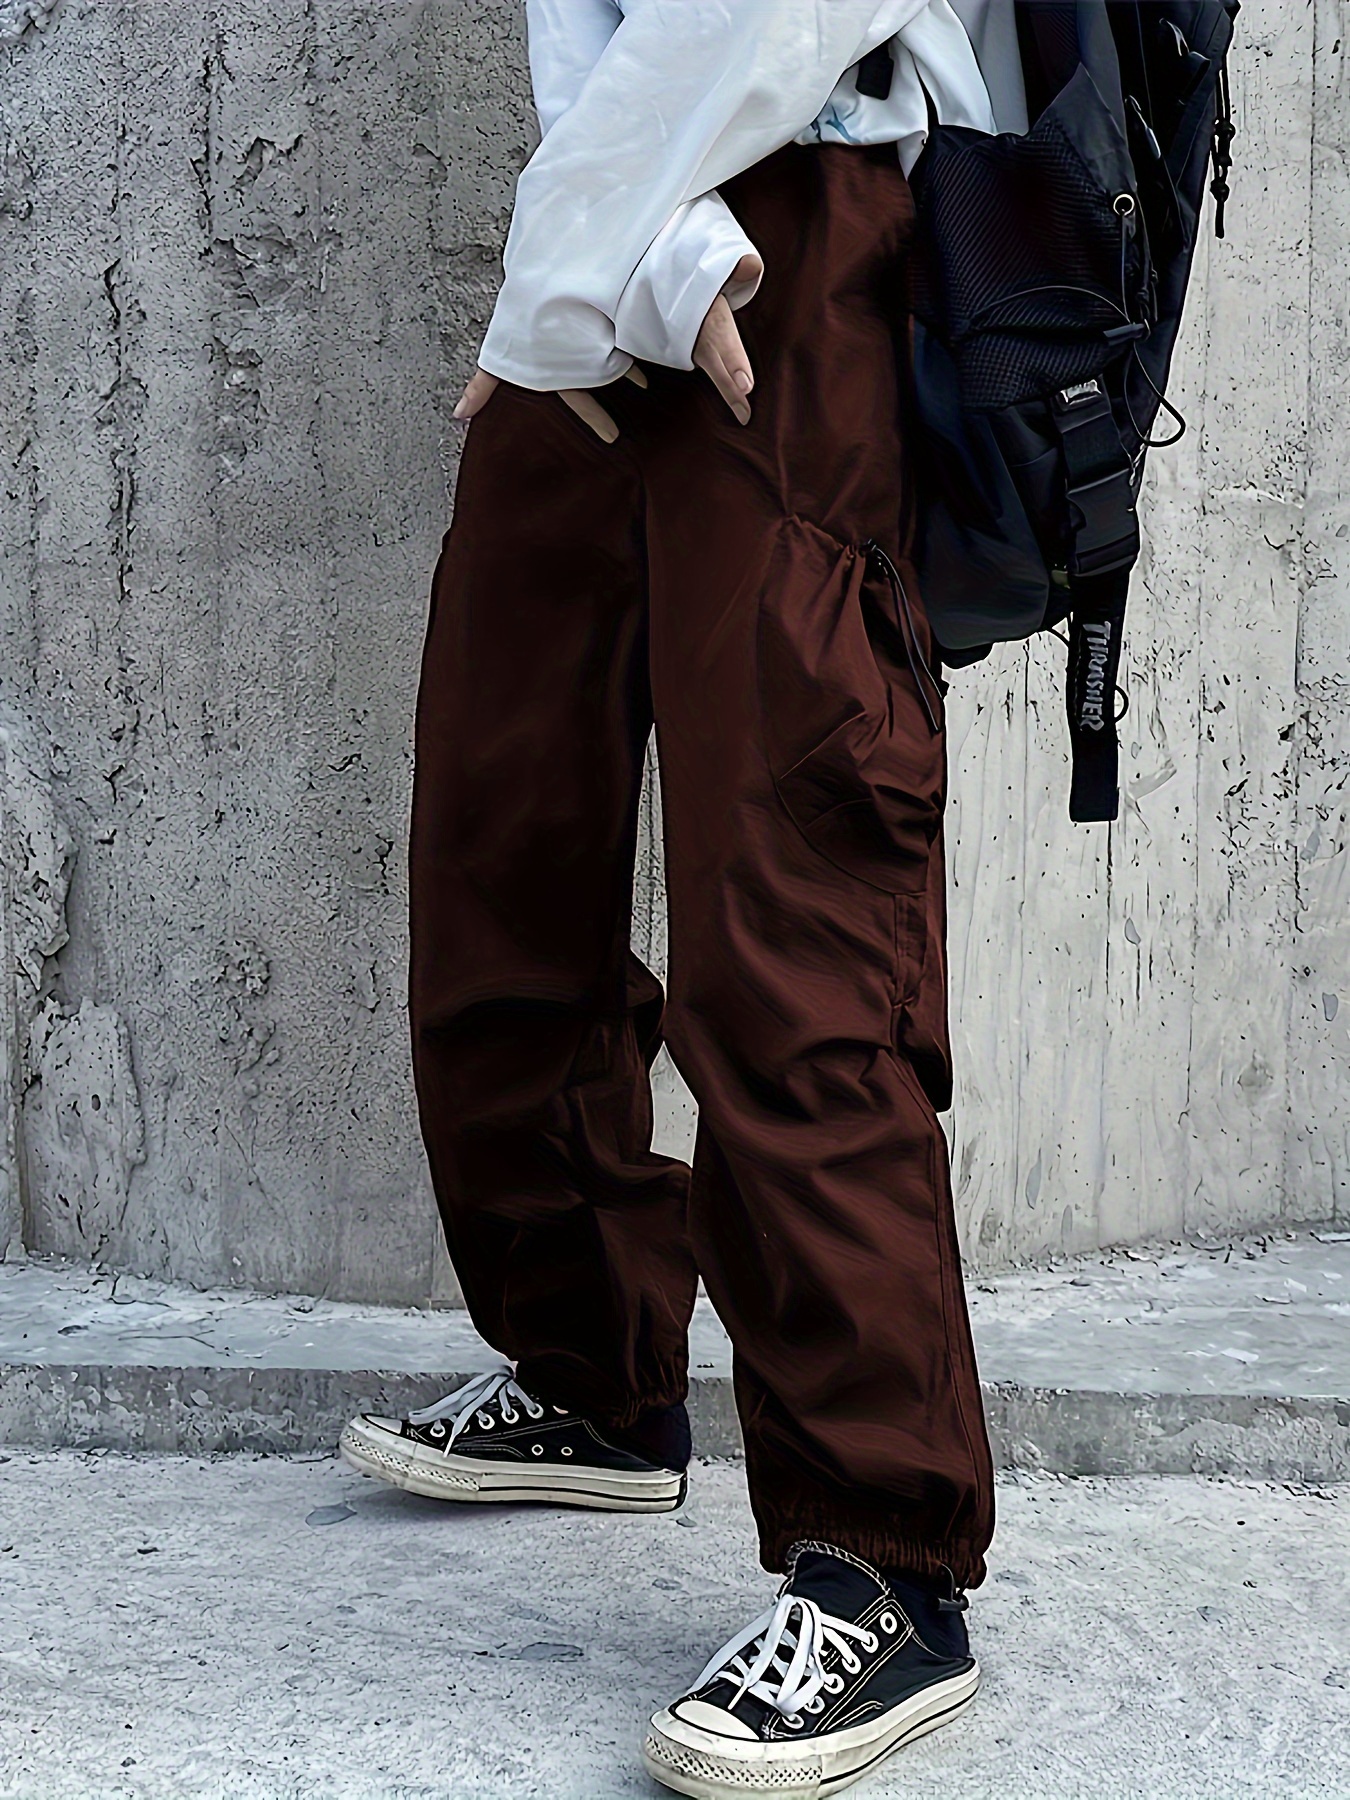  Women's Stylish Cargo Pants Trendy Irregular Pockets